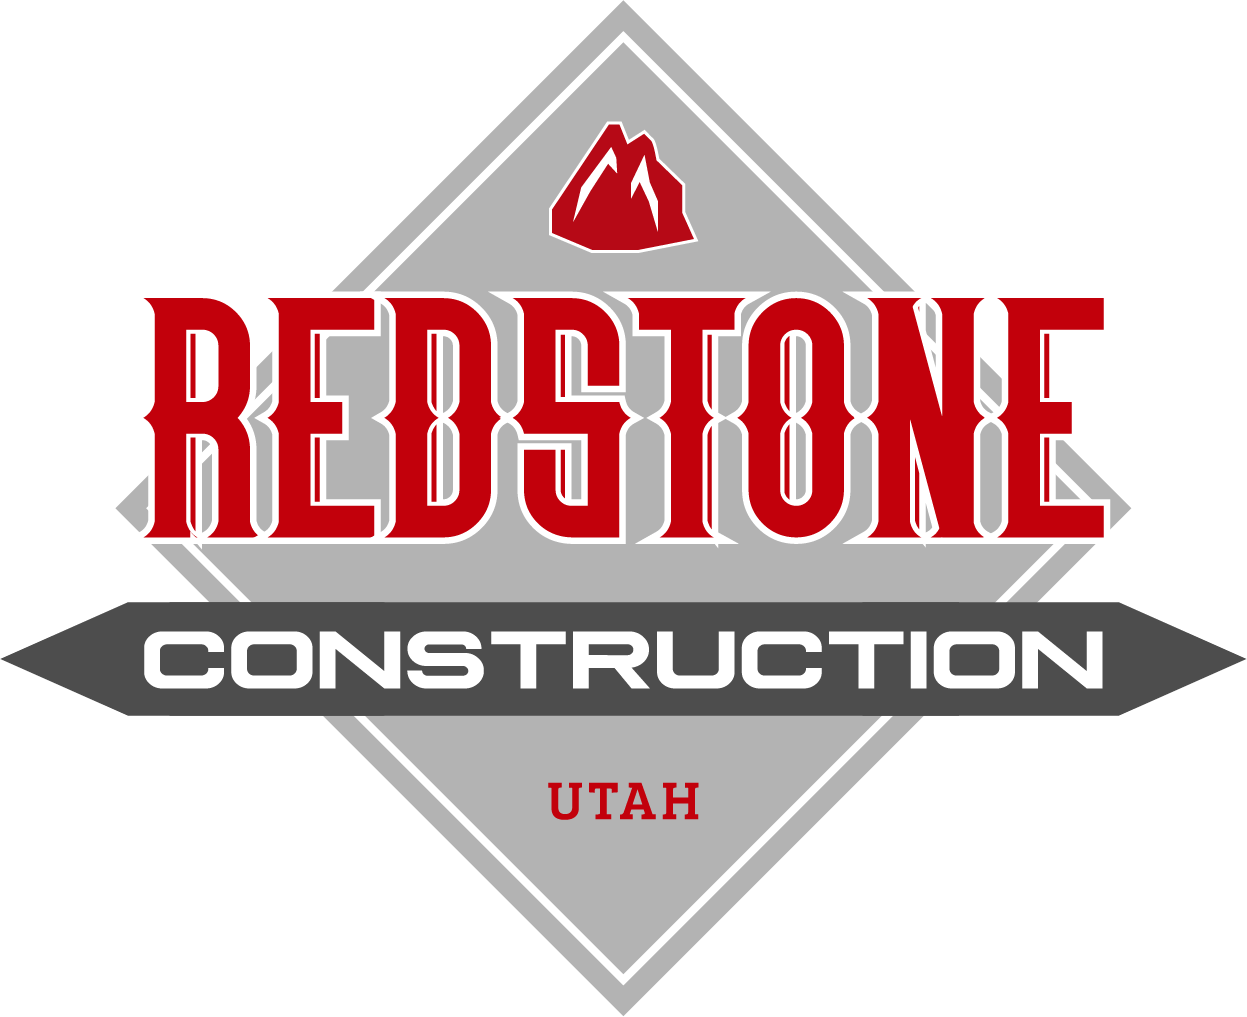 Redstone Construction